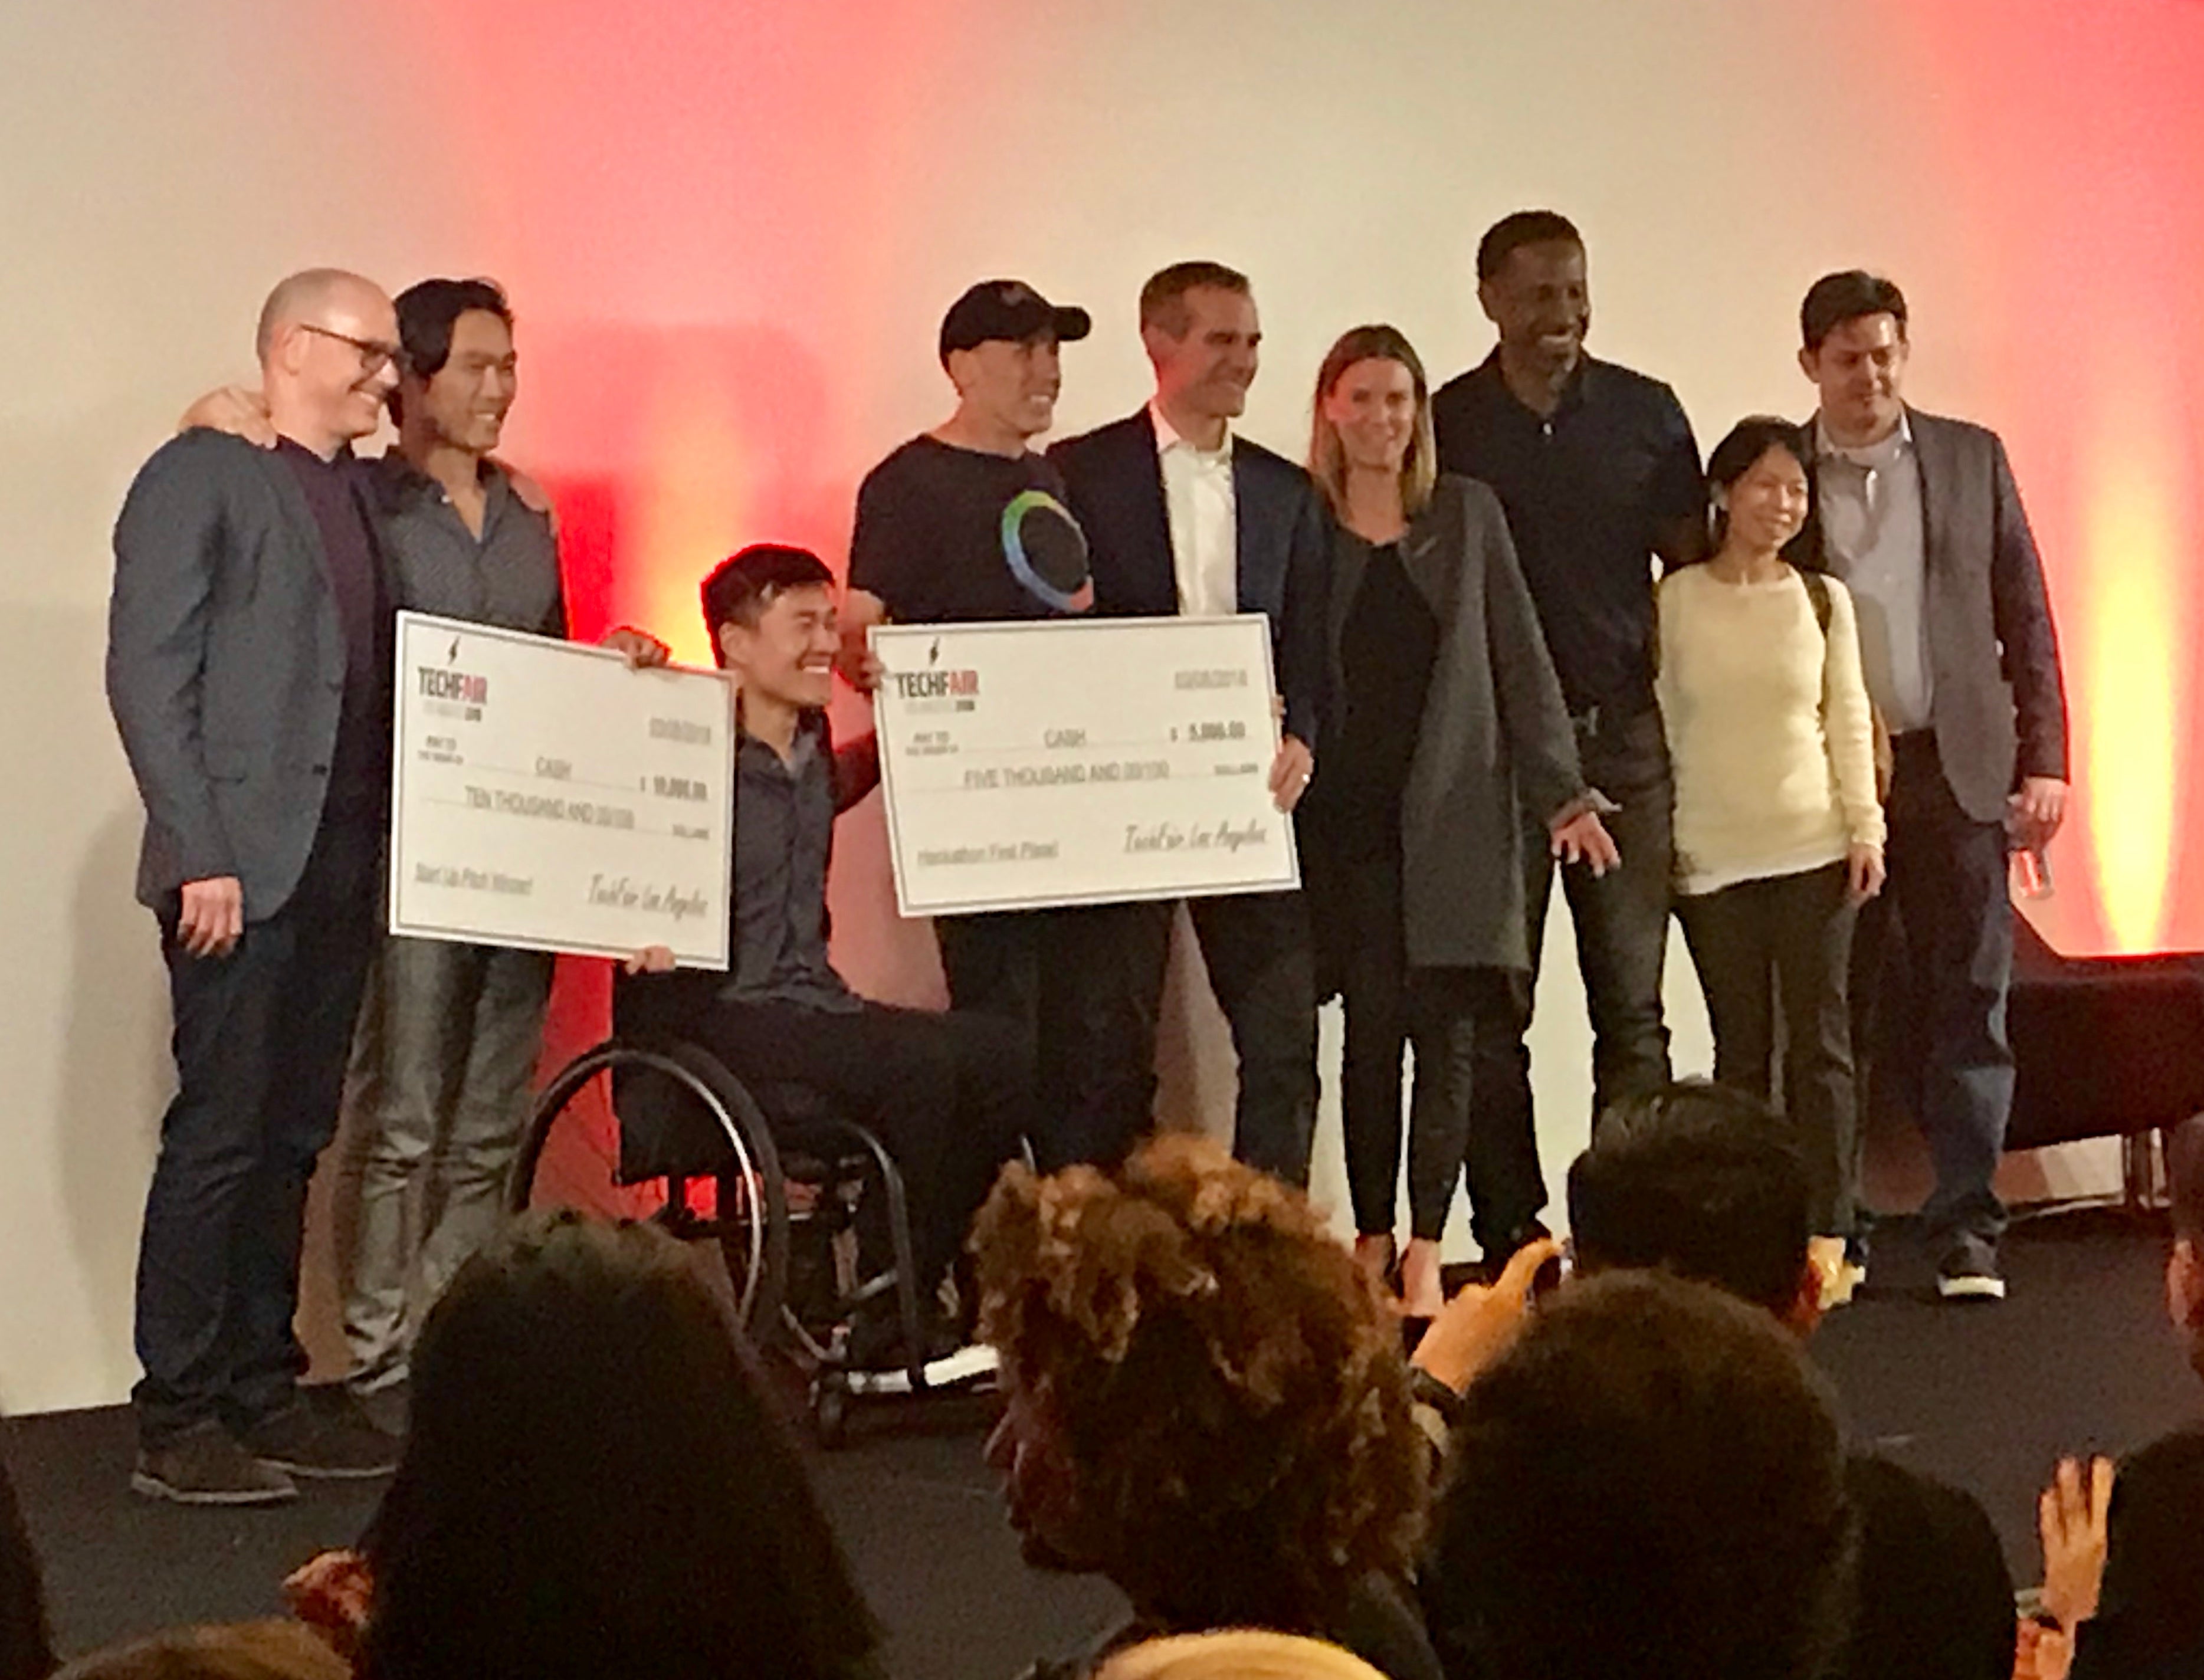 Neuro wins the LA Tech Fair Startup Competition